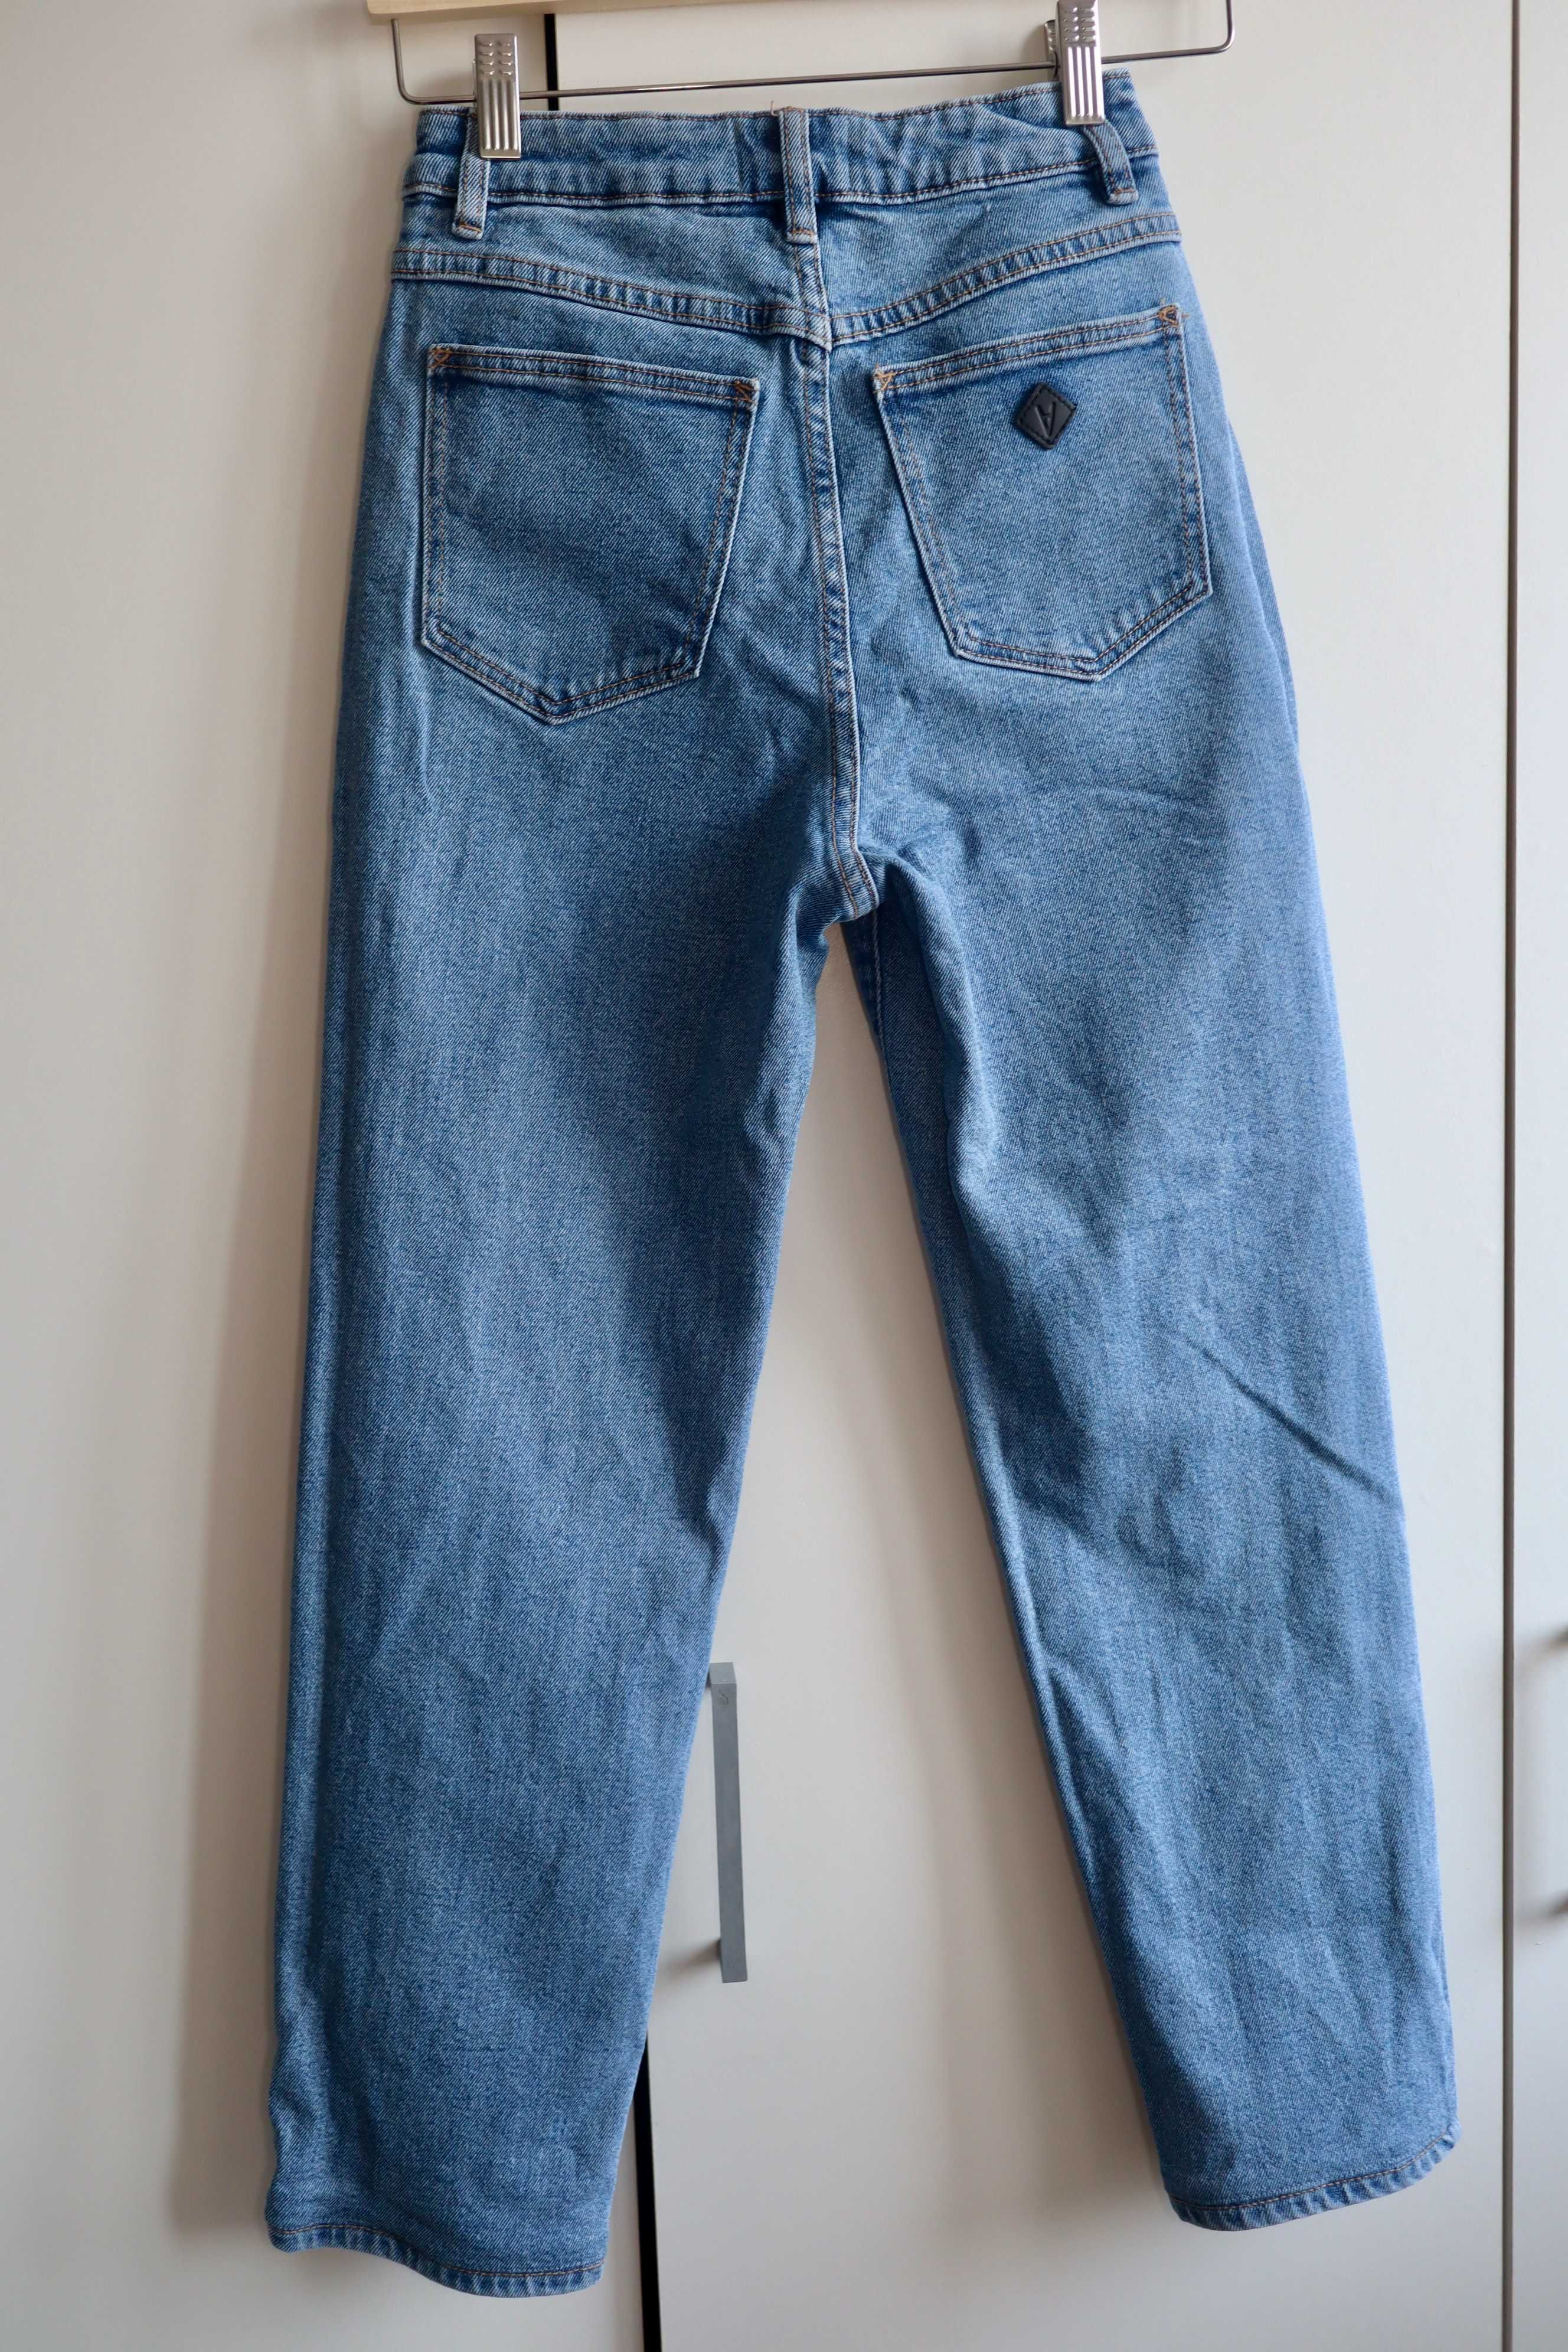 Spodnie Abrand Jeans damskie rozmiar 25 (czyli 34), high slim